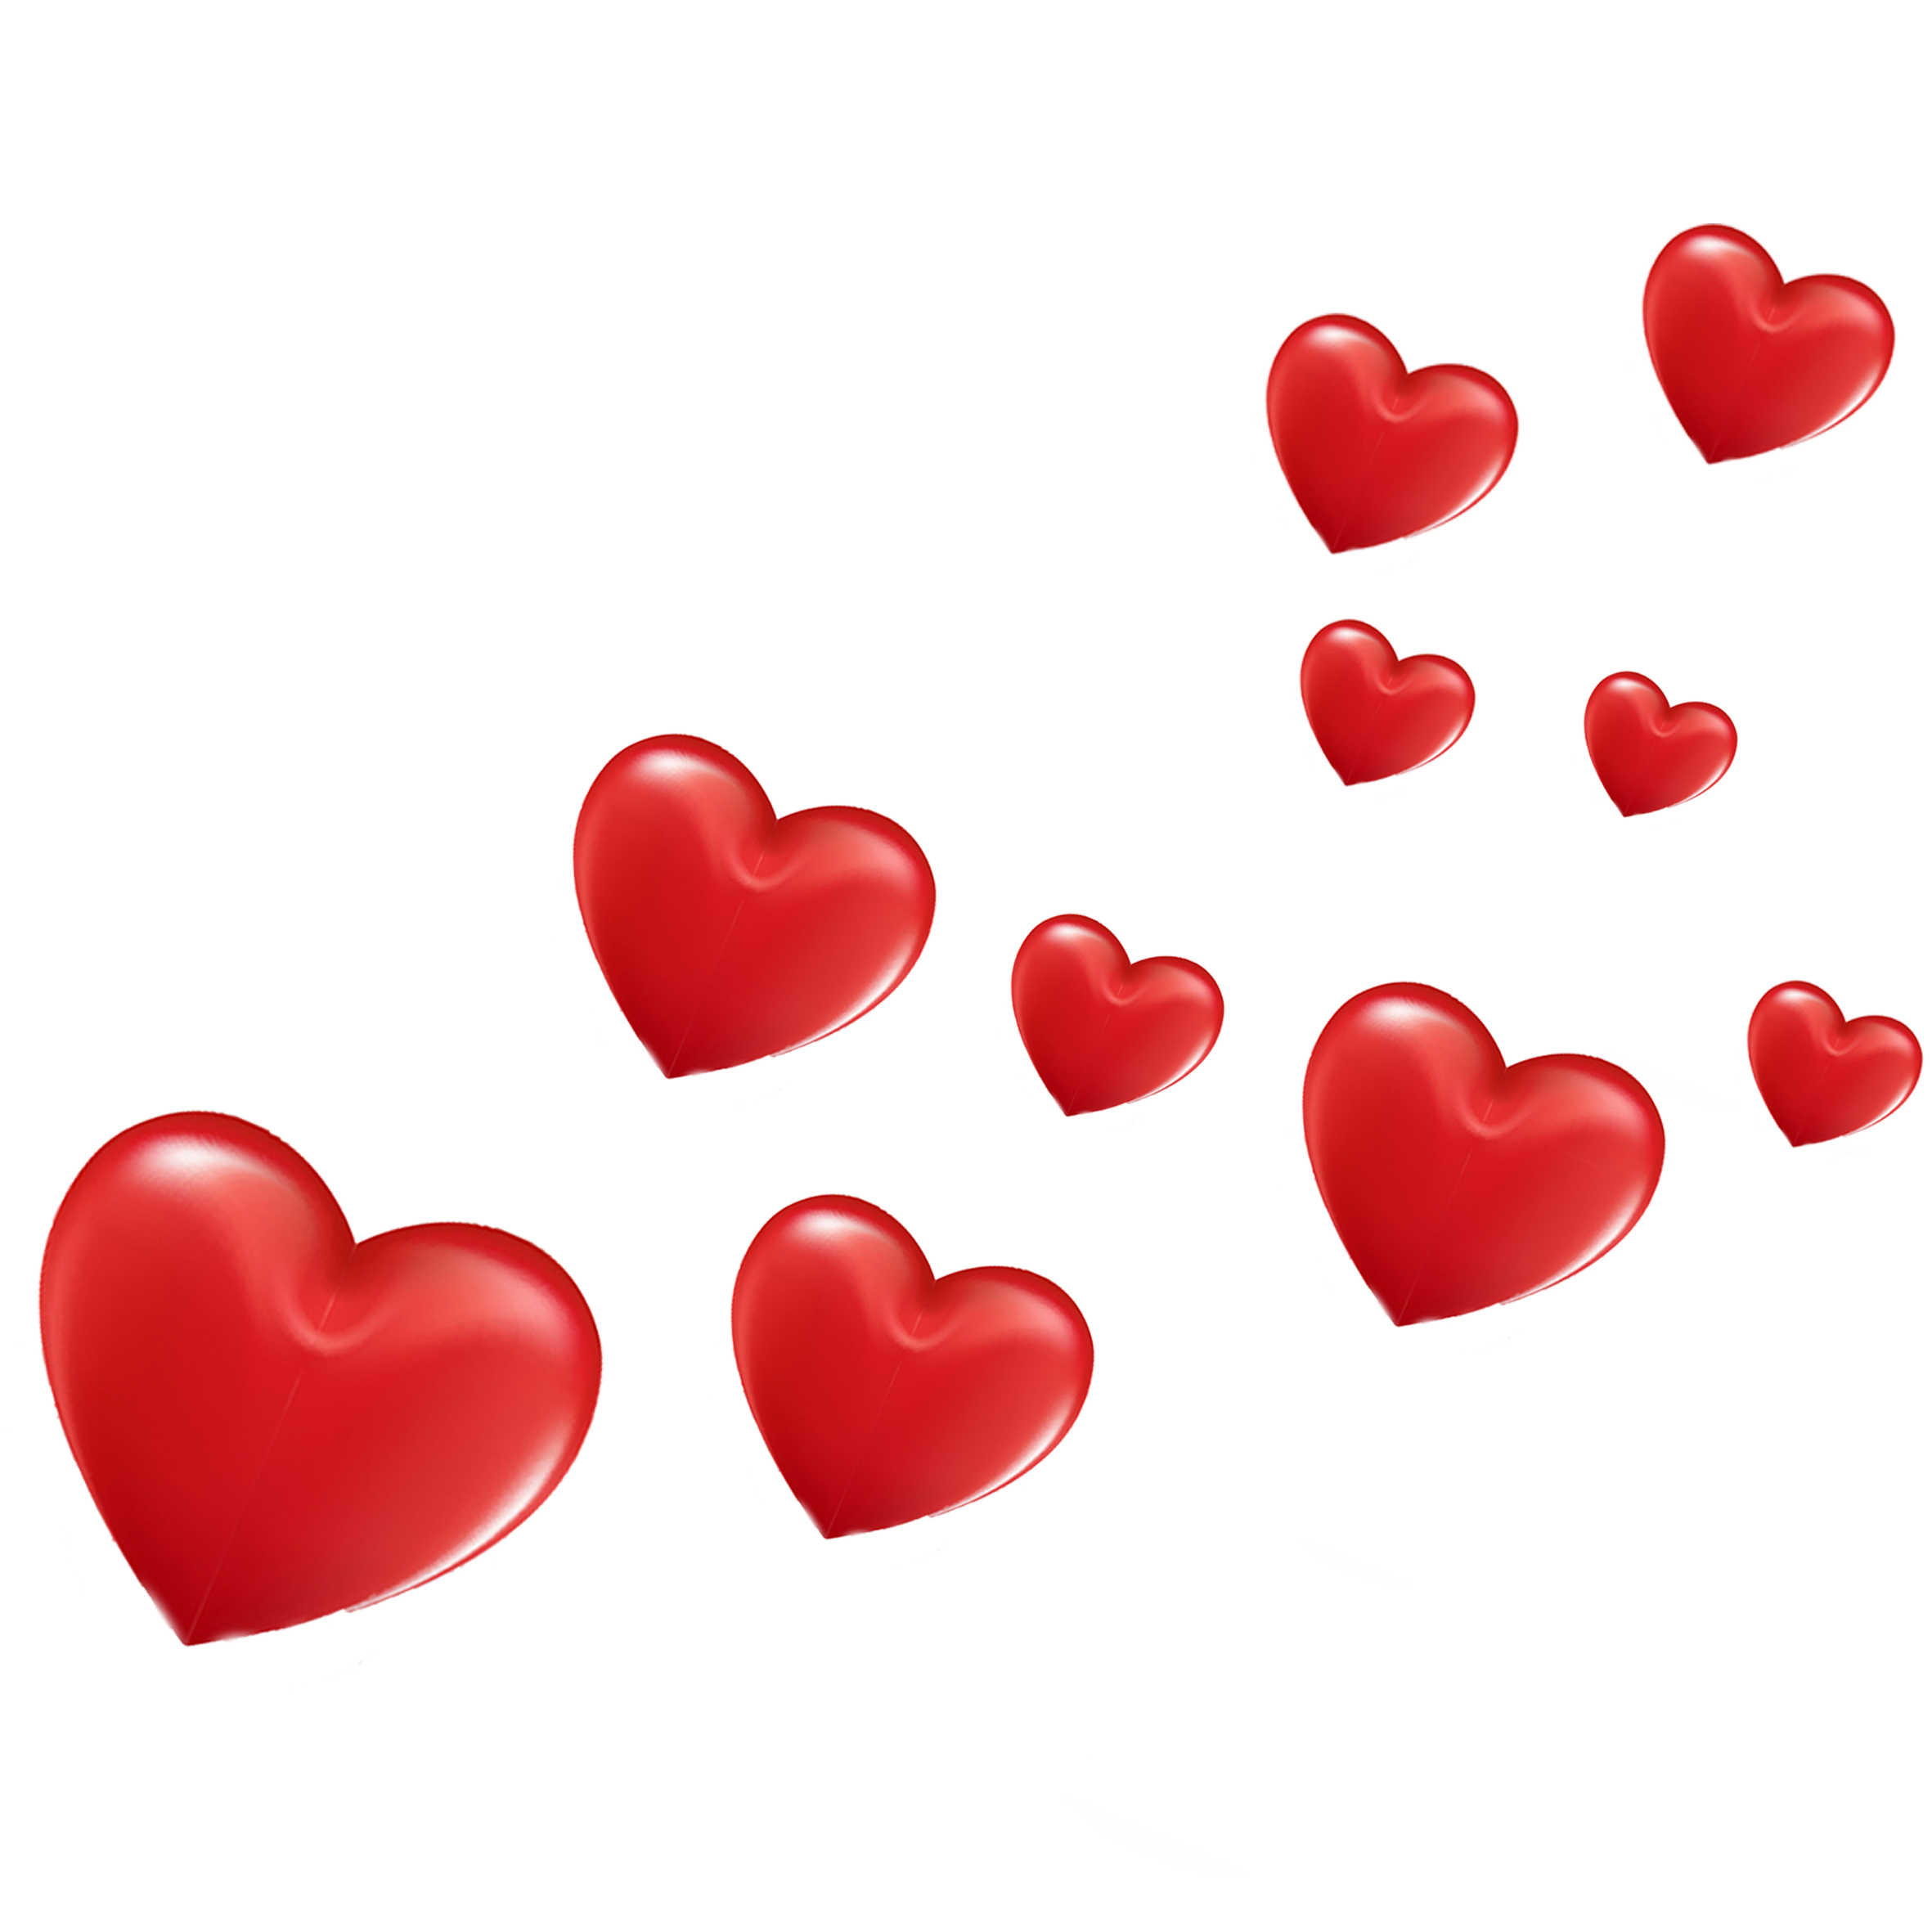 heart-drawing-fantasy-hearts-png-download-2362-2362-free